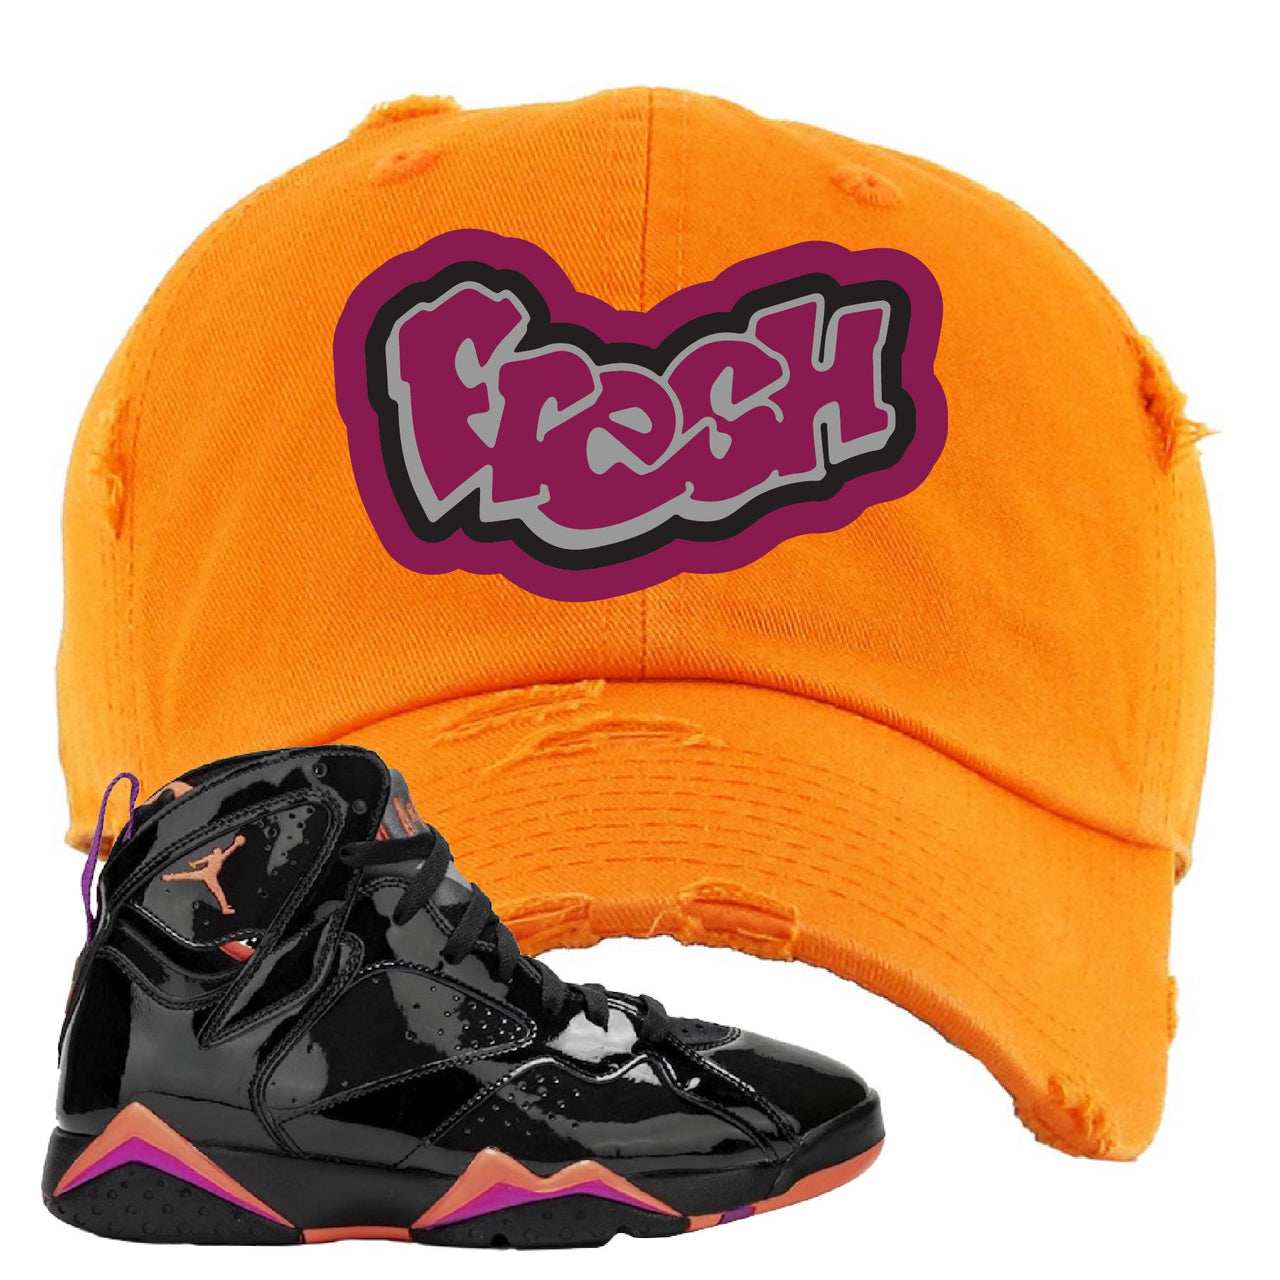 Jordan 7 WMNS Black Patent Leather Fresh Orange Sneaker Hook Up Distressed Dad Hat